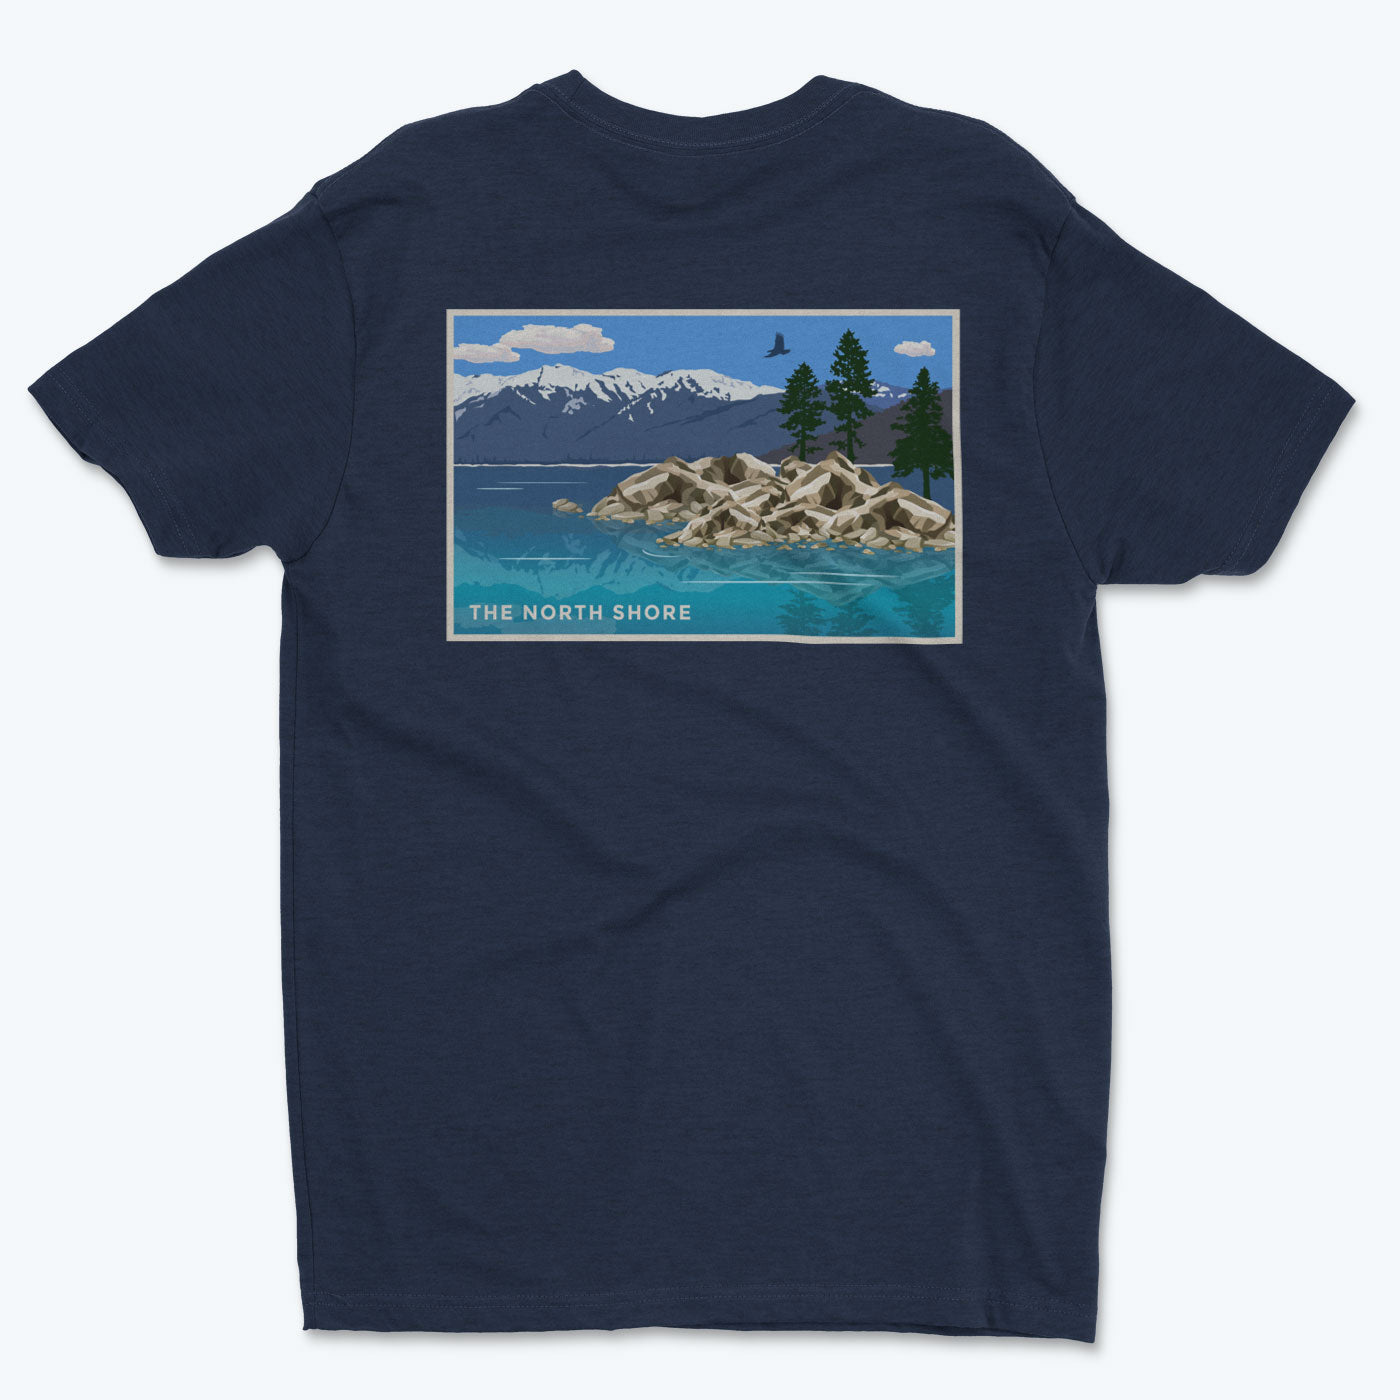 The North Shore T-Shirt